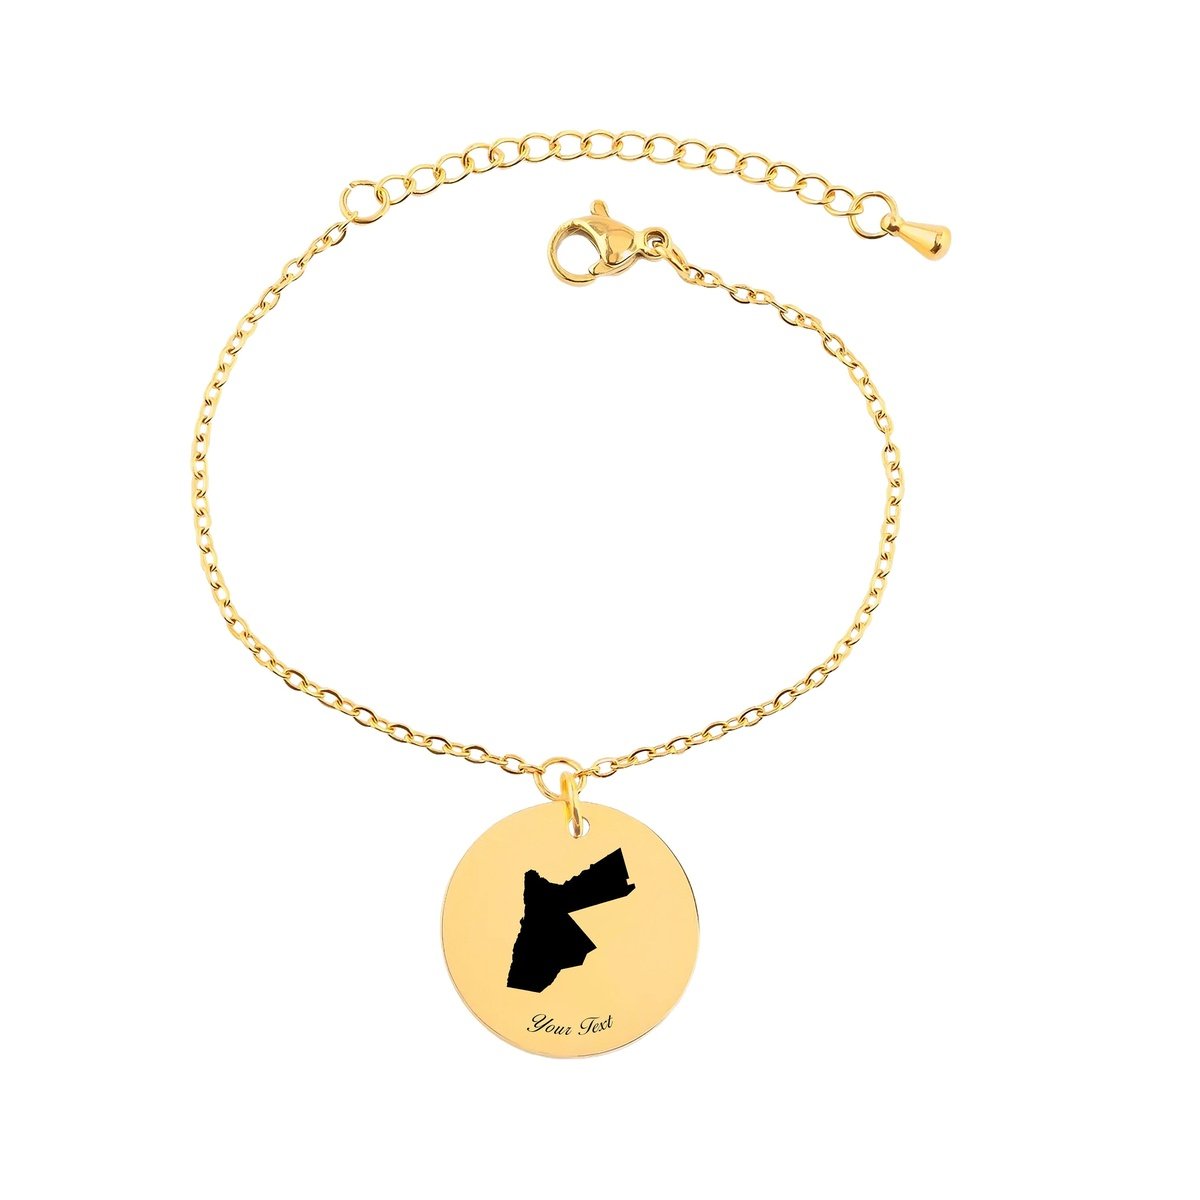 Jordan Country Map Bracelet, Your Name Bracelet, Minimalist Bracelet, Personalized Gift, 14K Gold Bracelet, Gift For Him Her